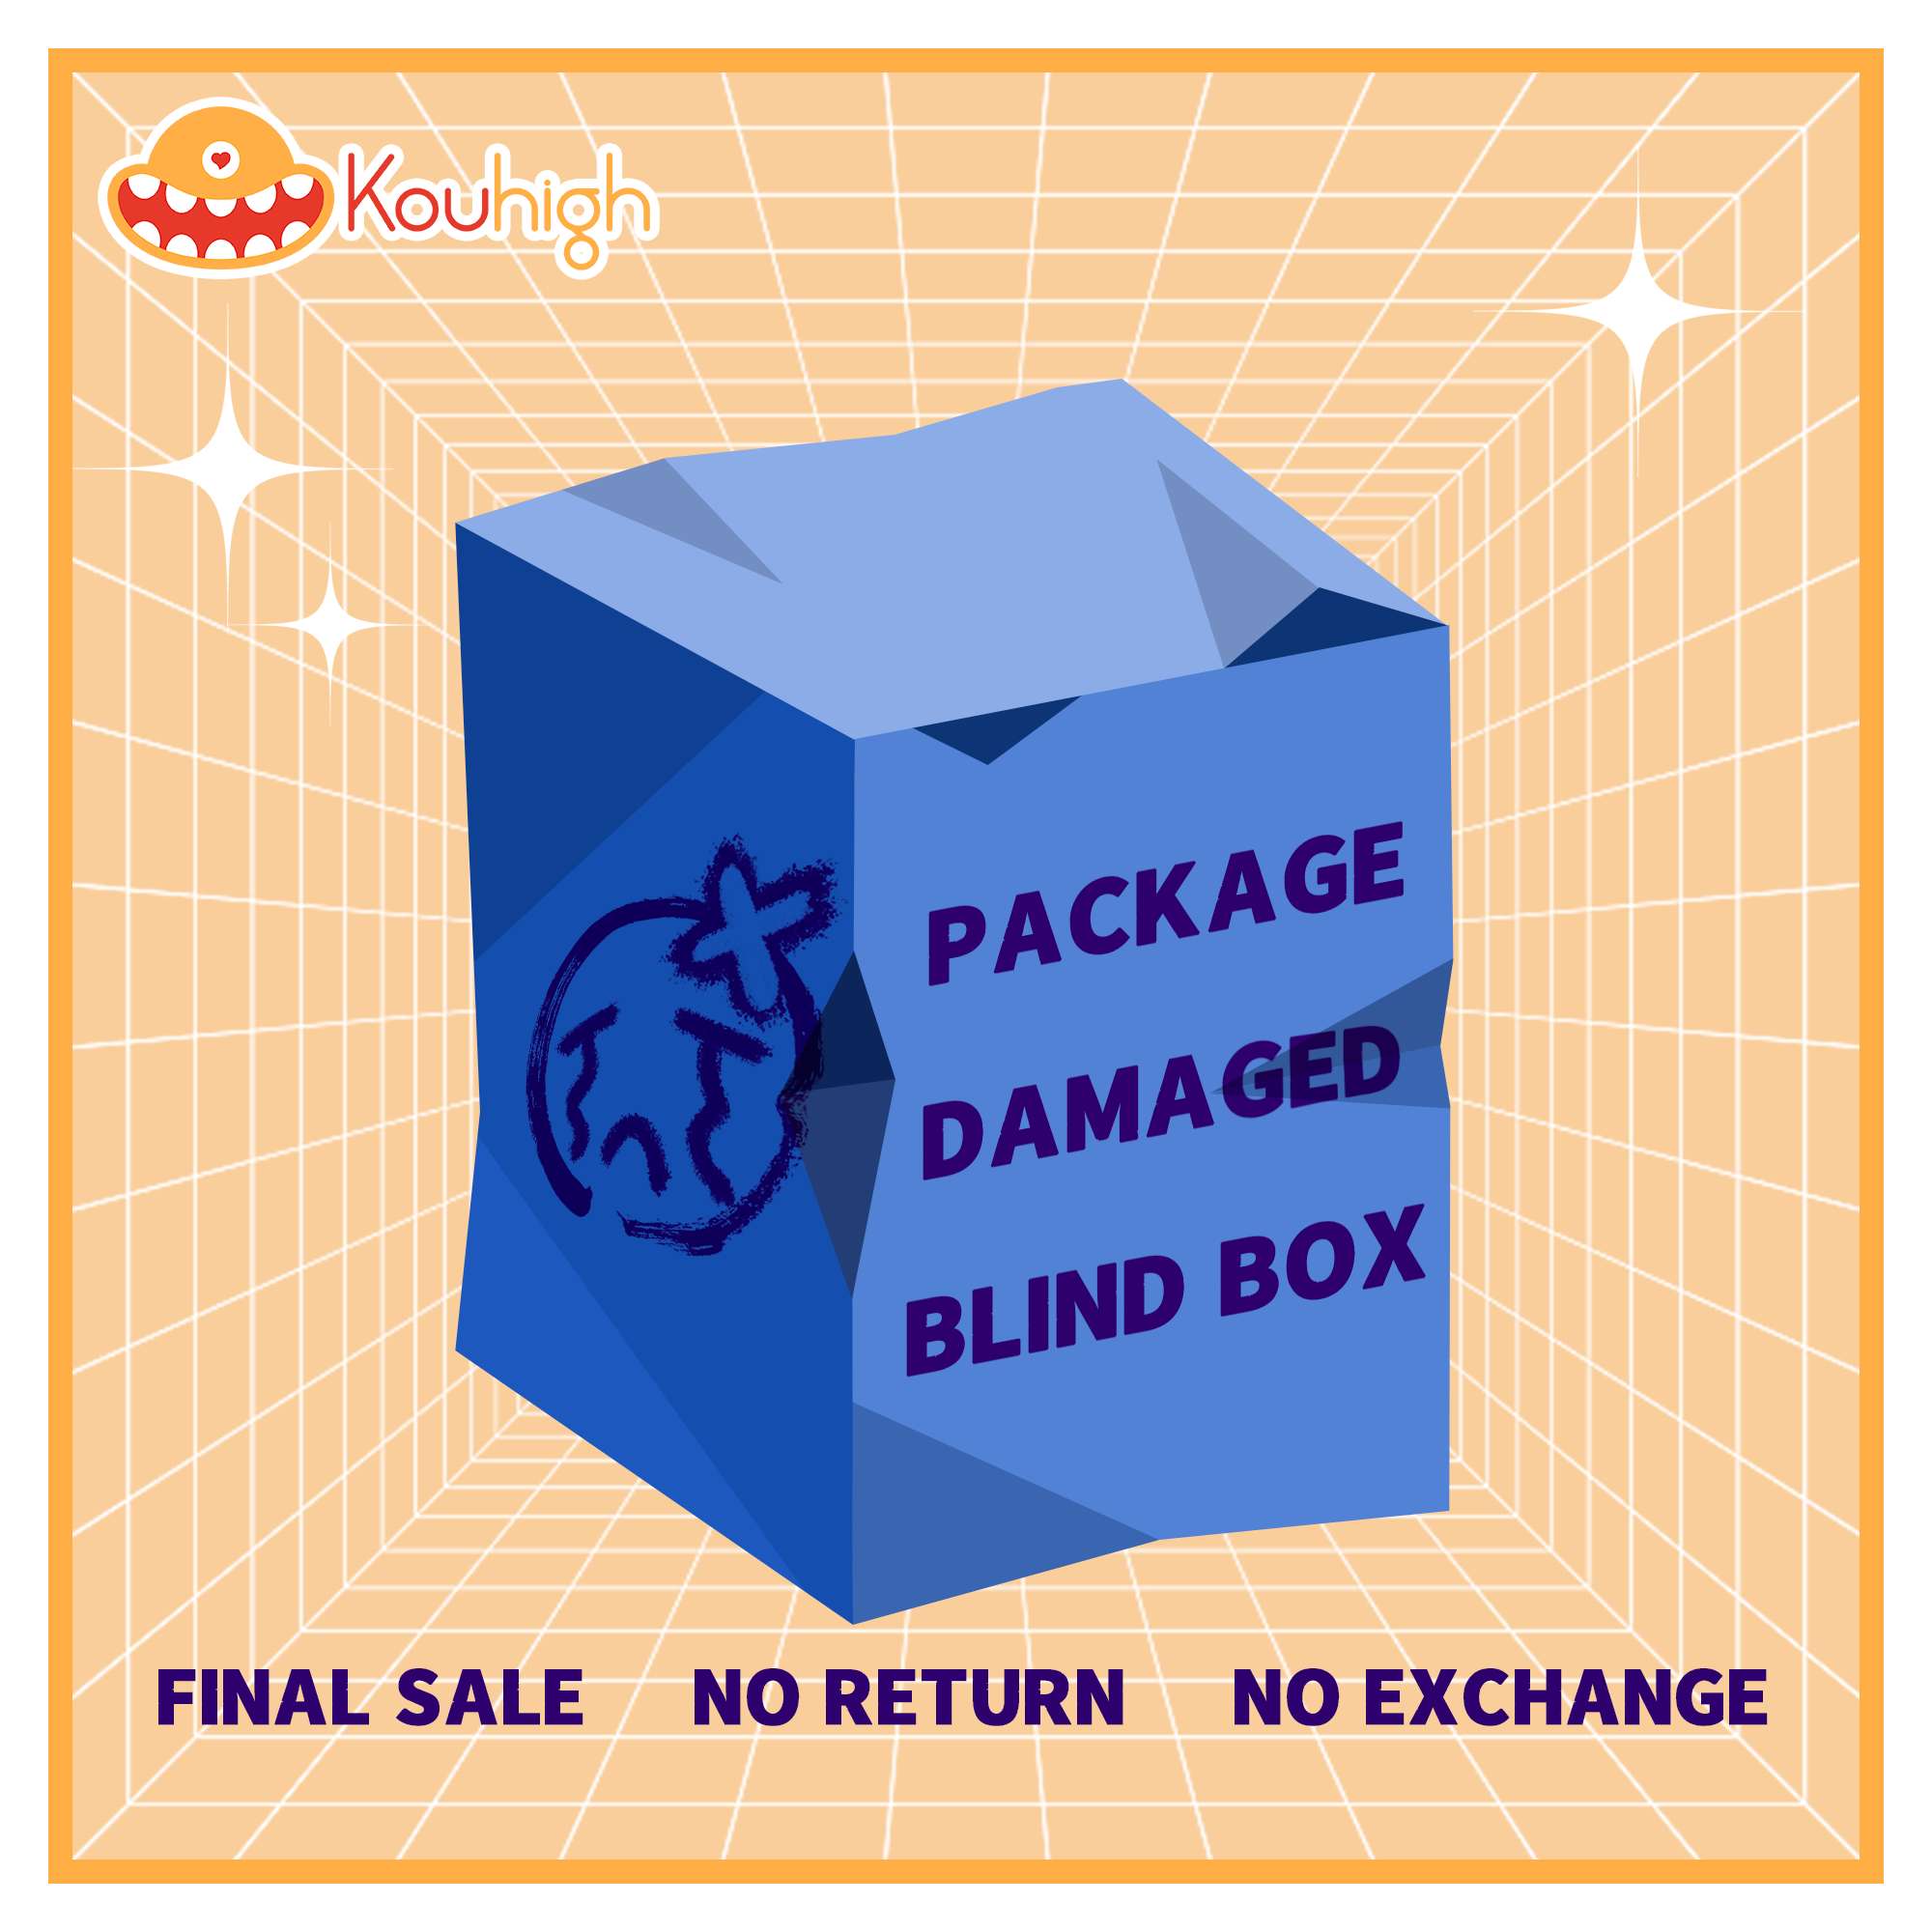 【FINAL SALE】Damaged Package Blind Box Random Style